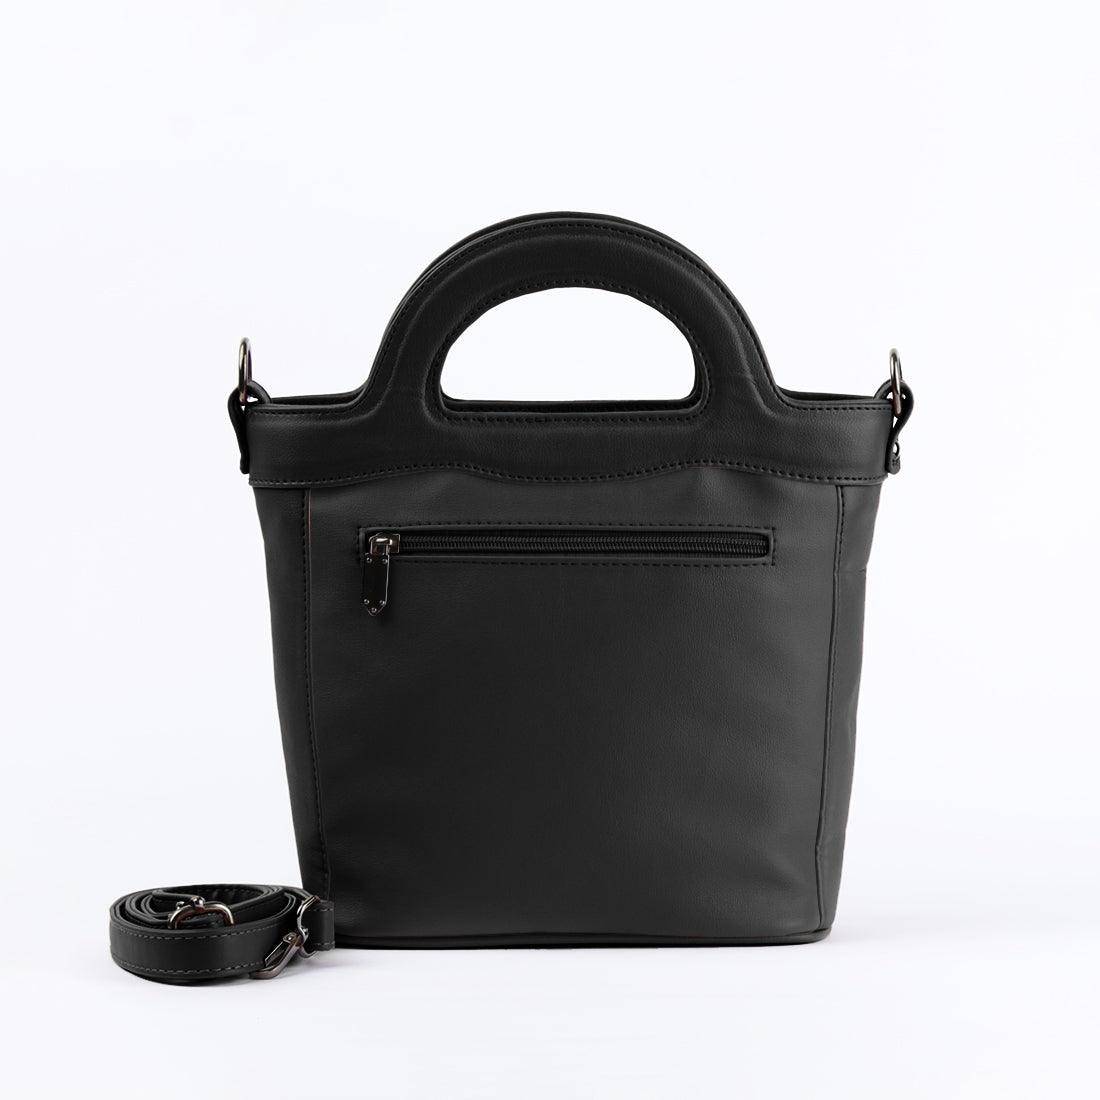 Black Top Handle Handbag Standing Flowers - CANVAEGYPT